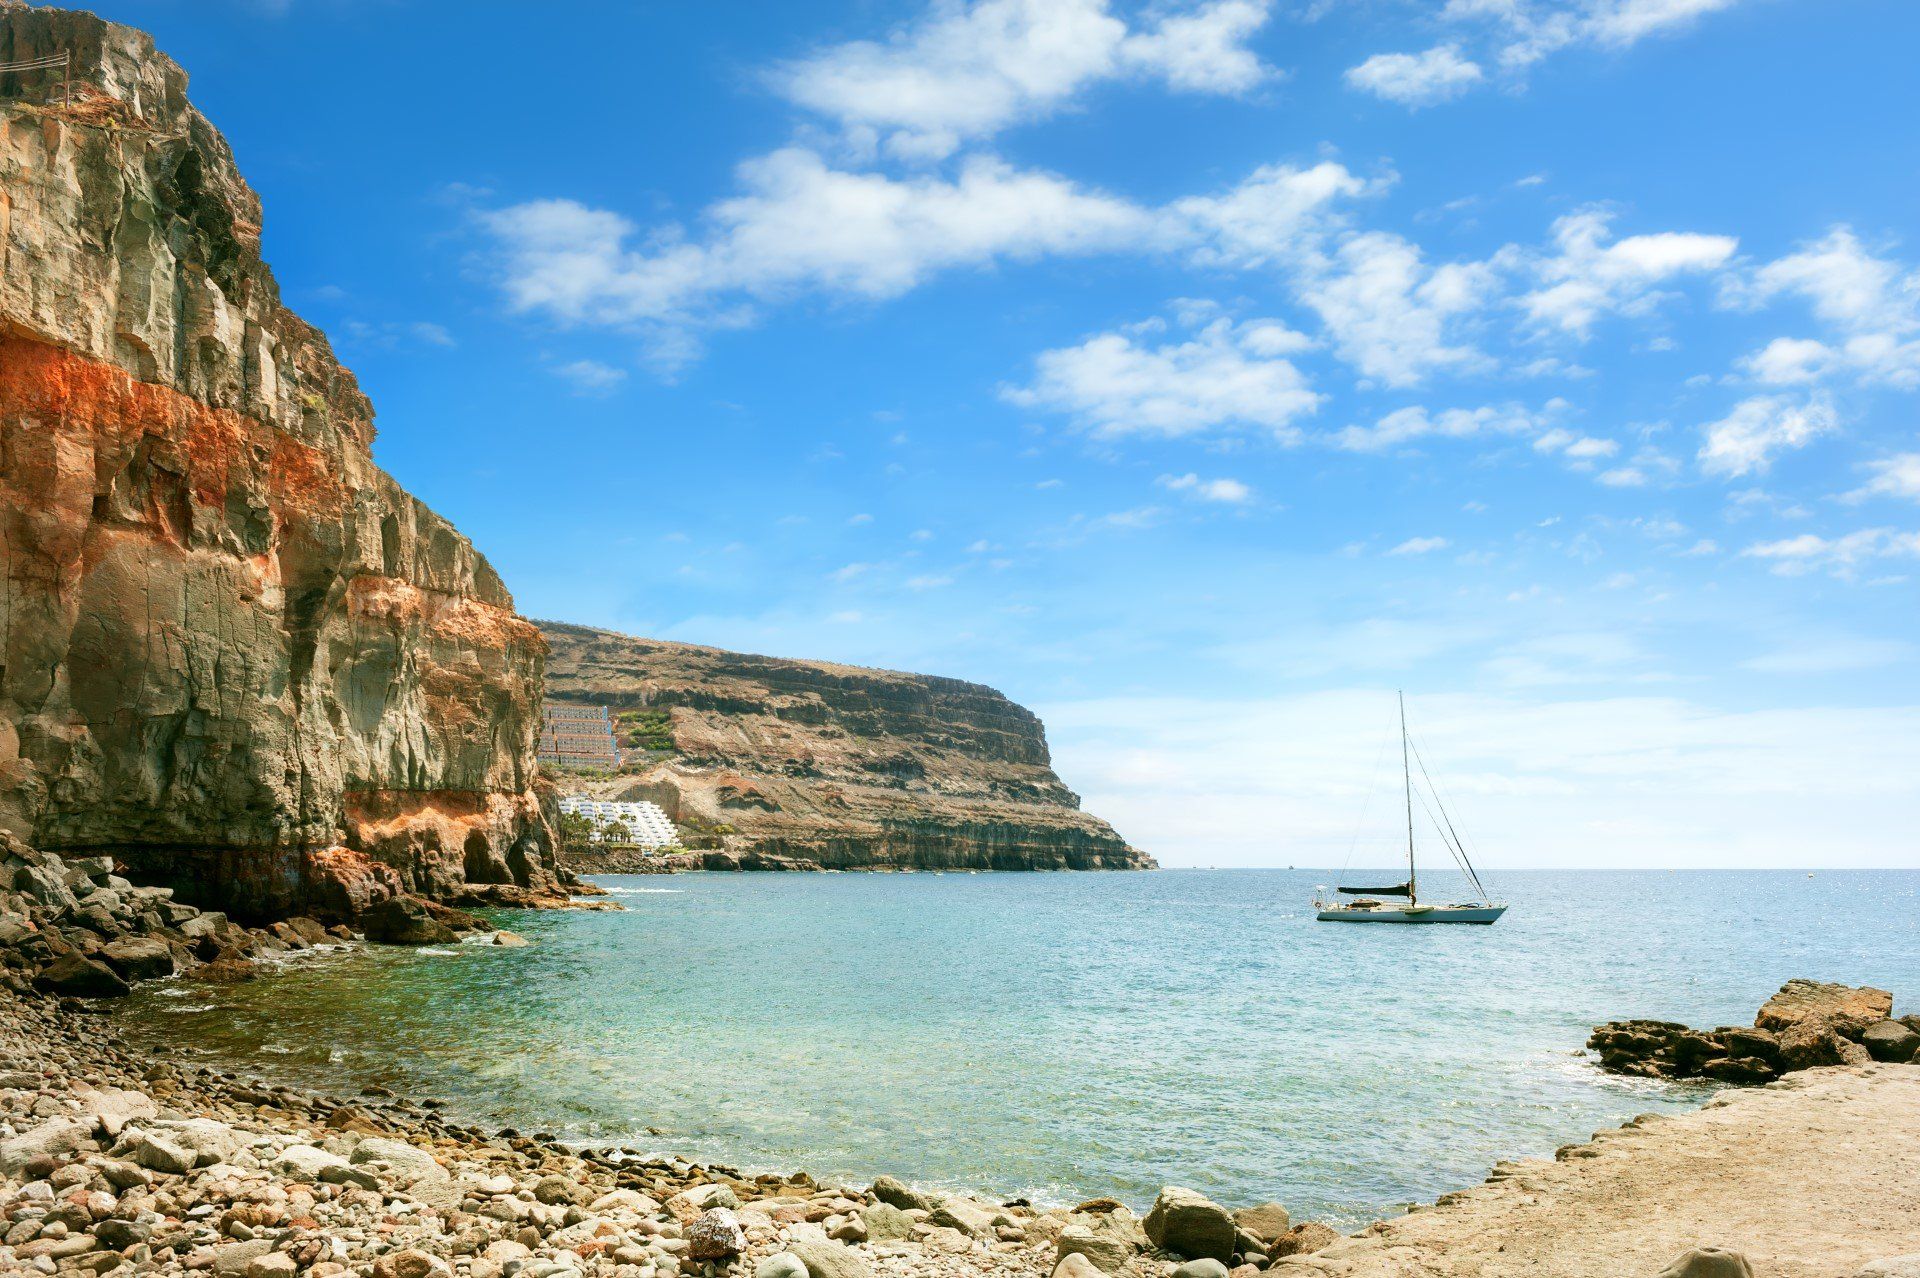 The tranquil resort of Puerto de Mogan, southwest Gran Canaria